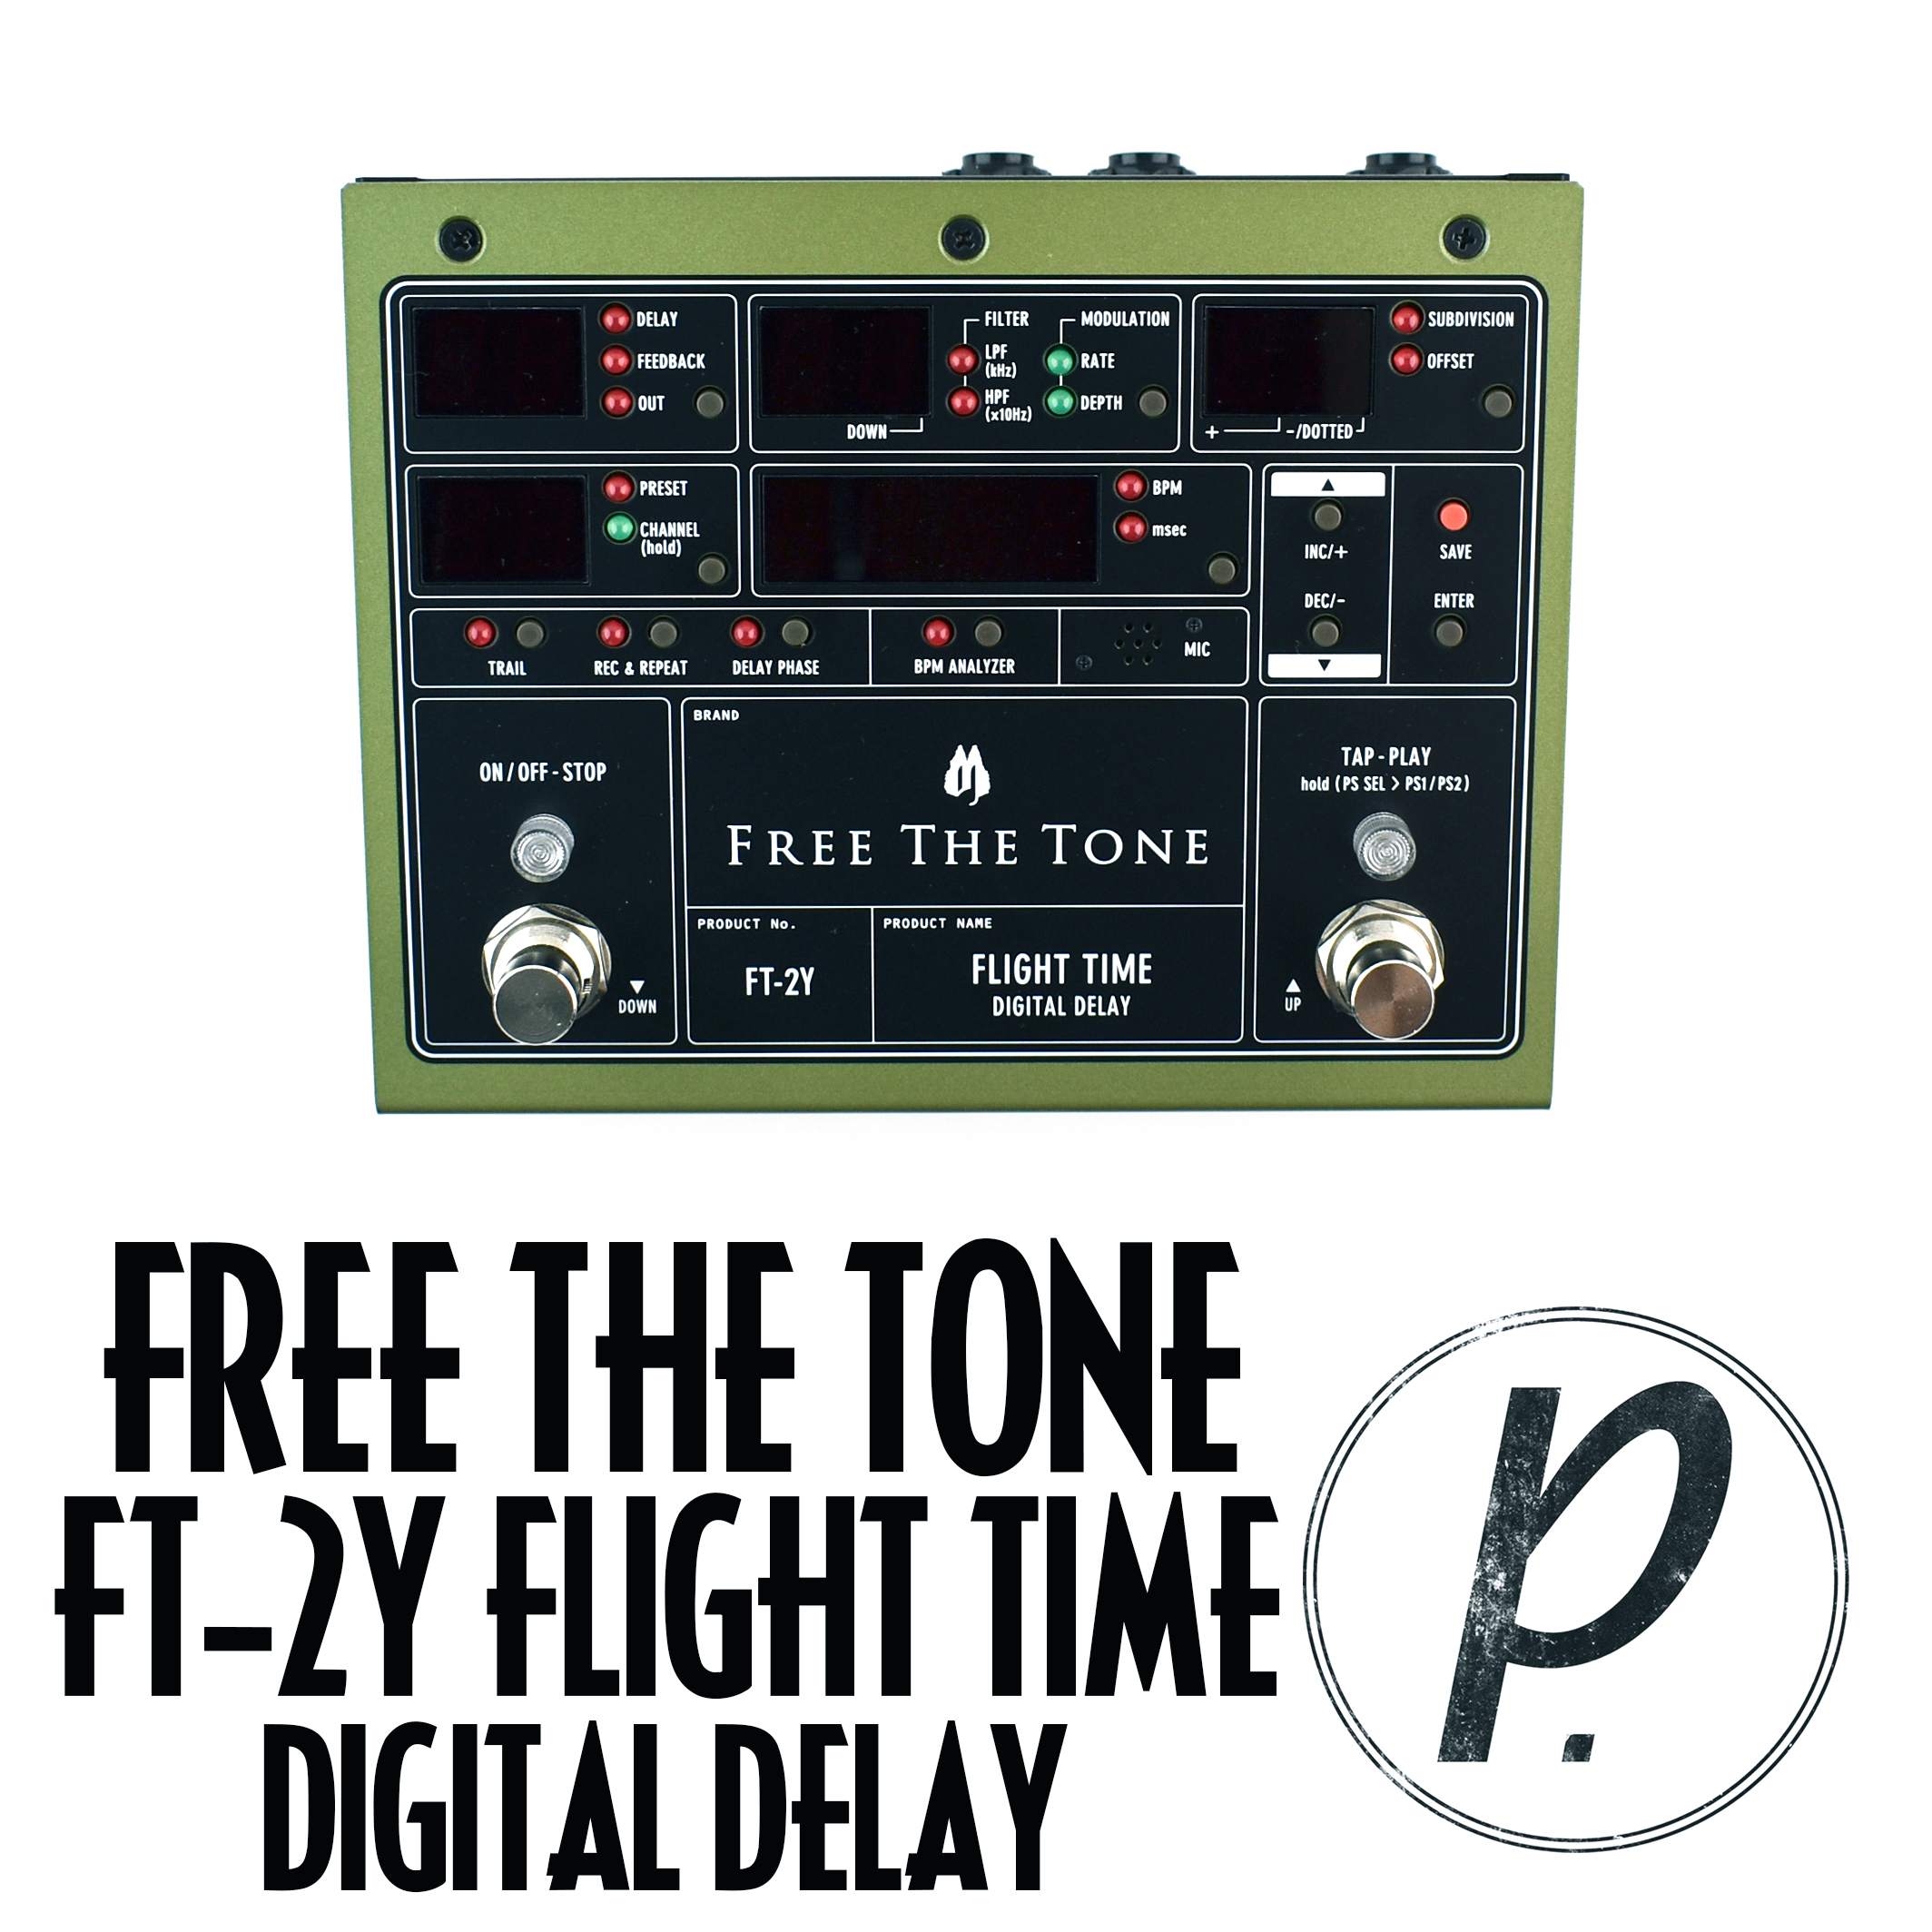 Free The Tone FLIGHT TIME DIGITAL DELAY FT-1Y 有名ブランド